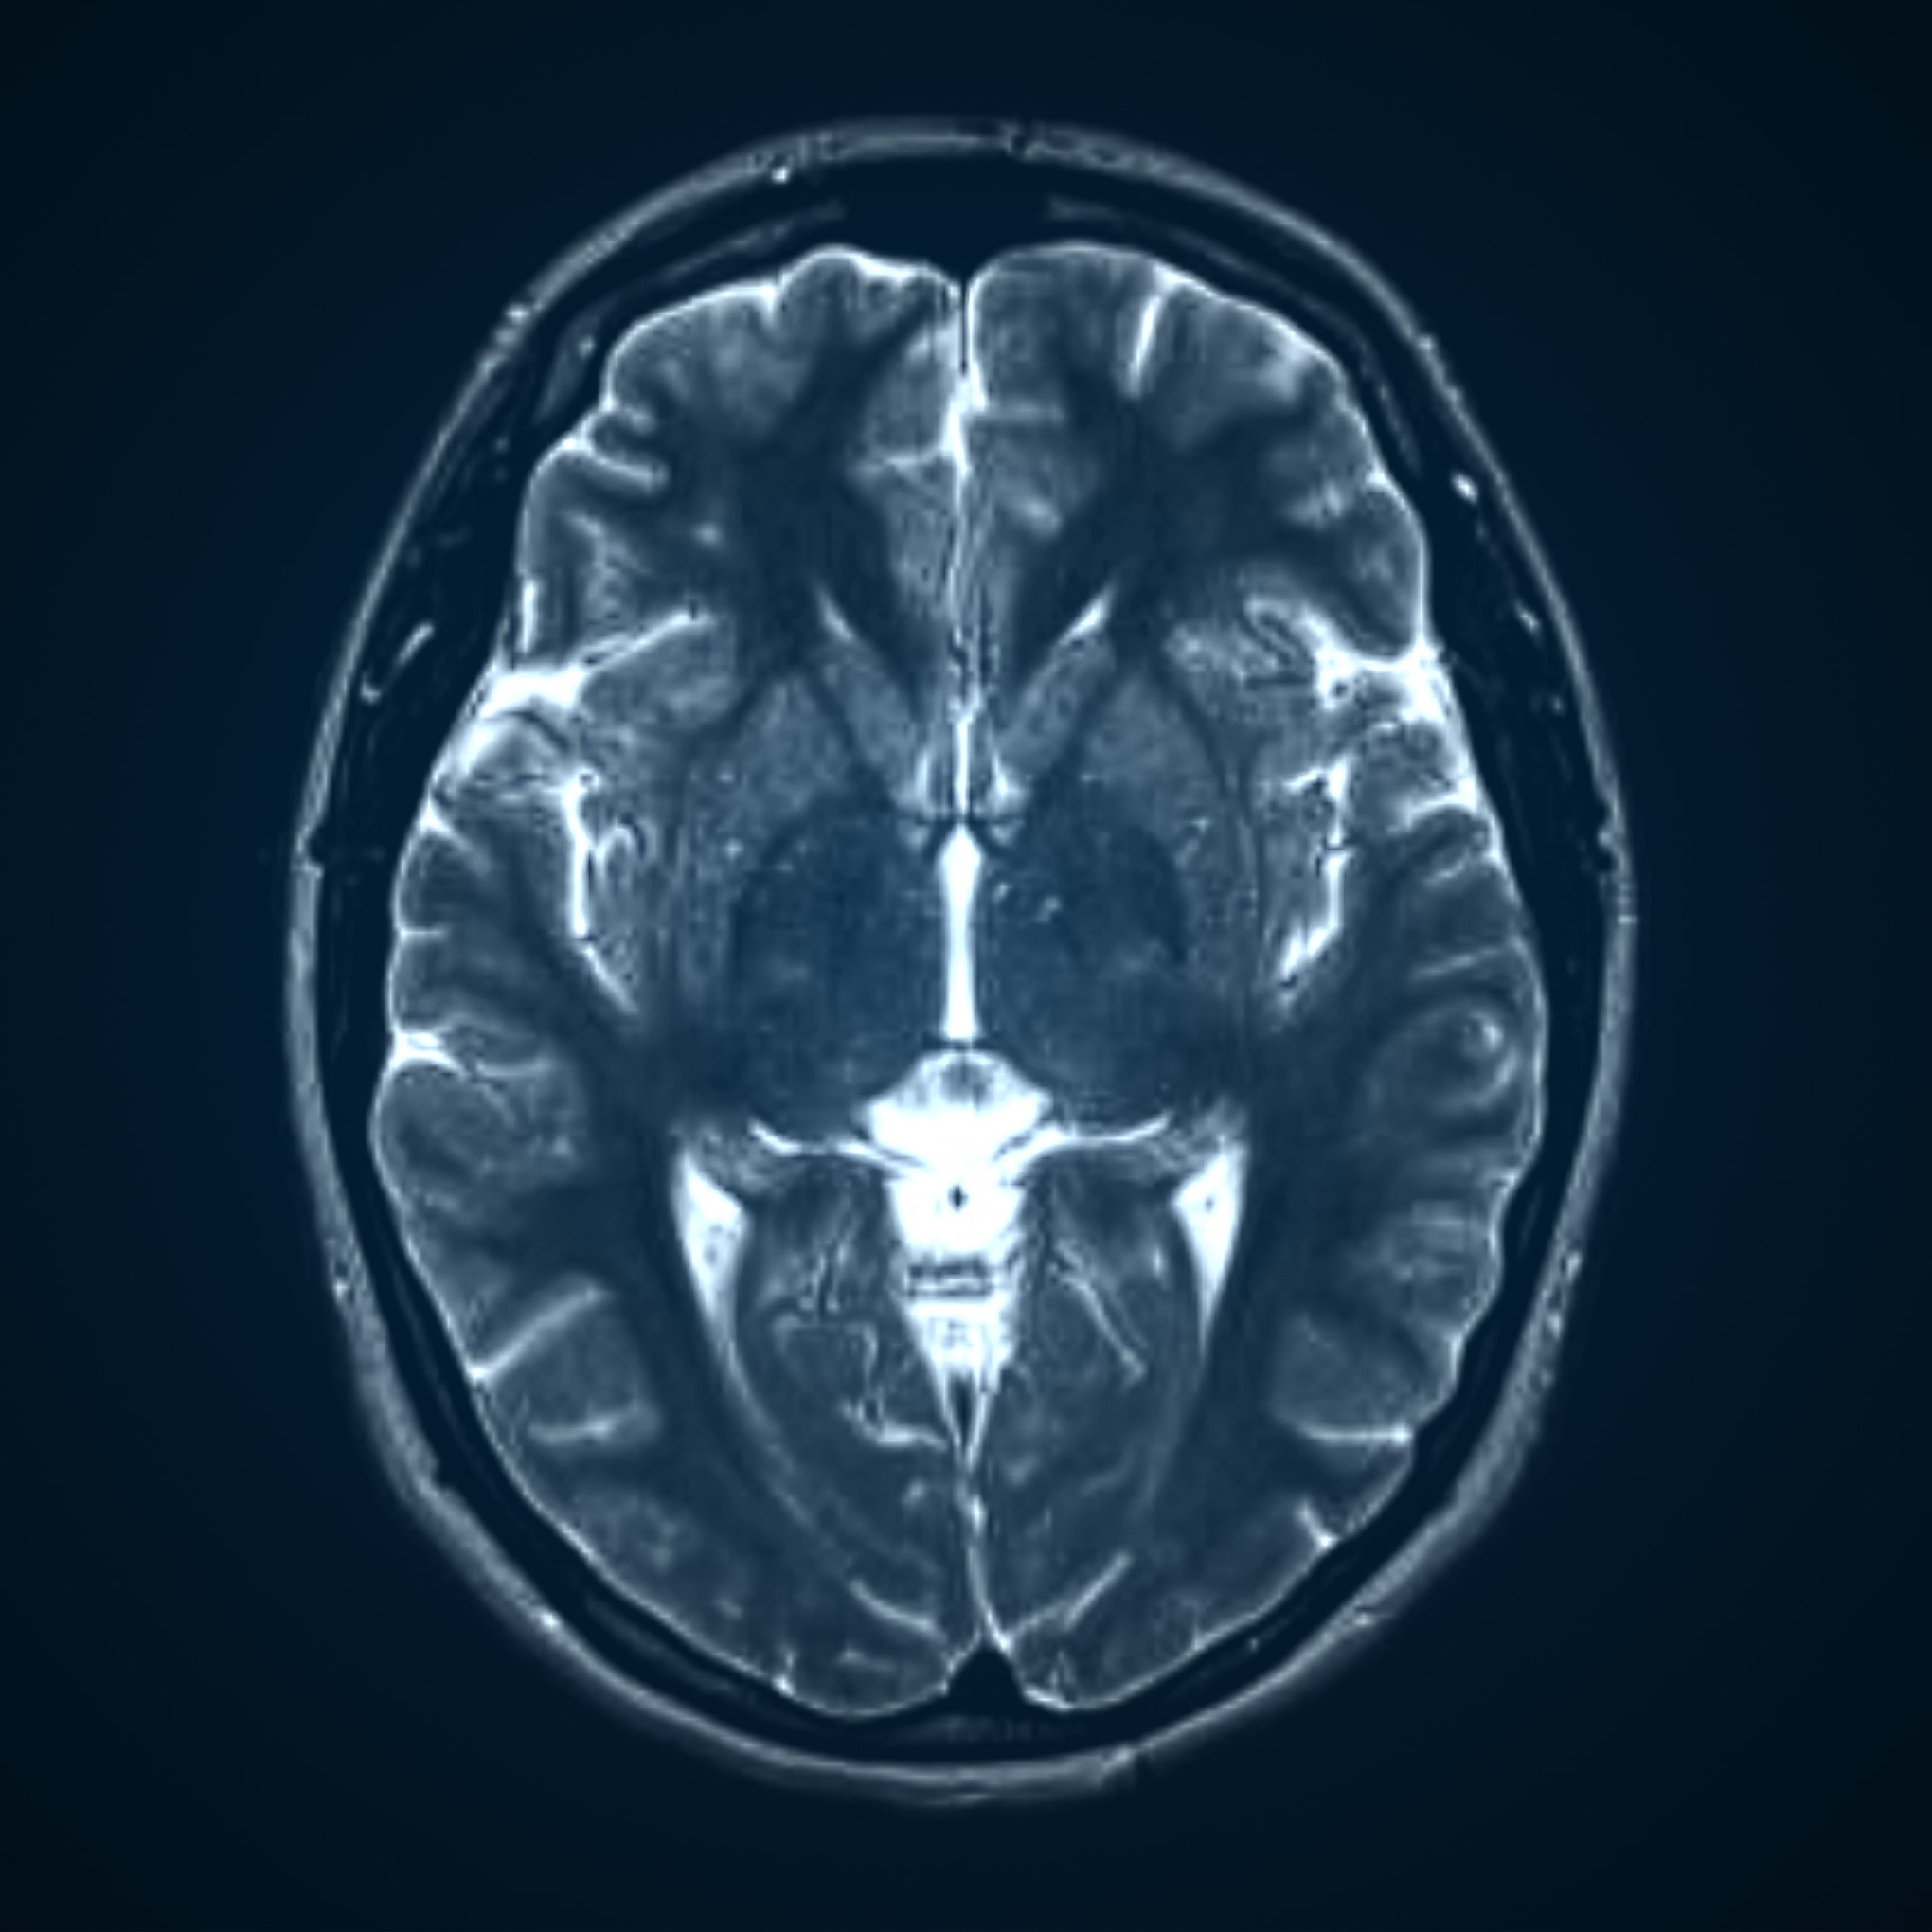 fMRI vs. SPECT Scan for the Brain